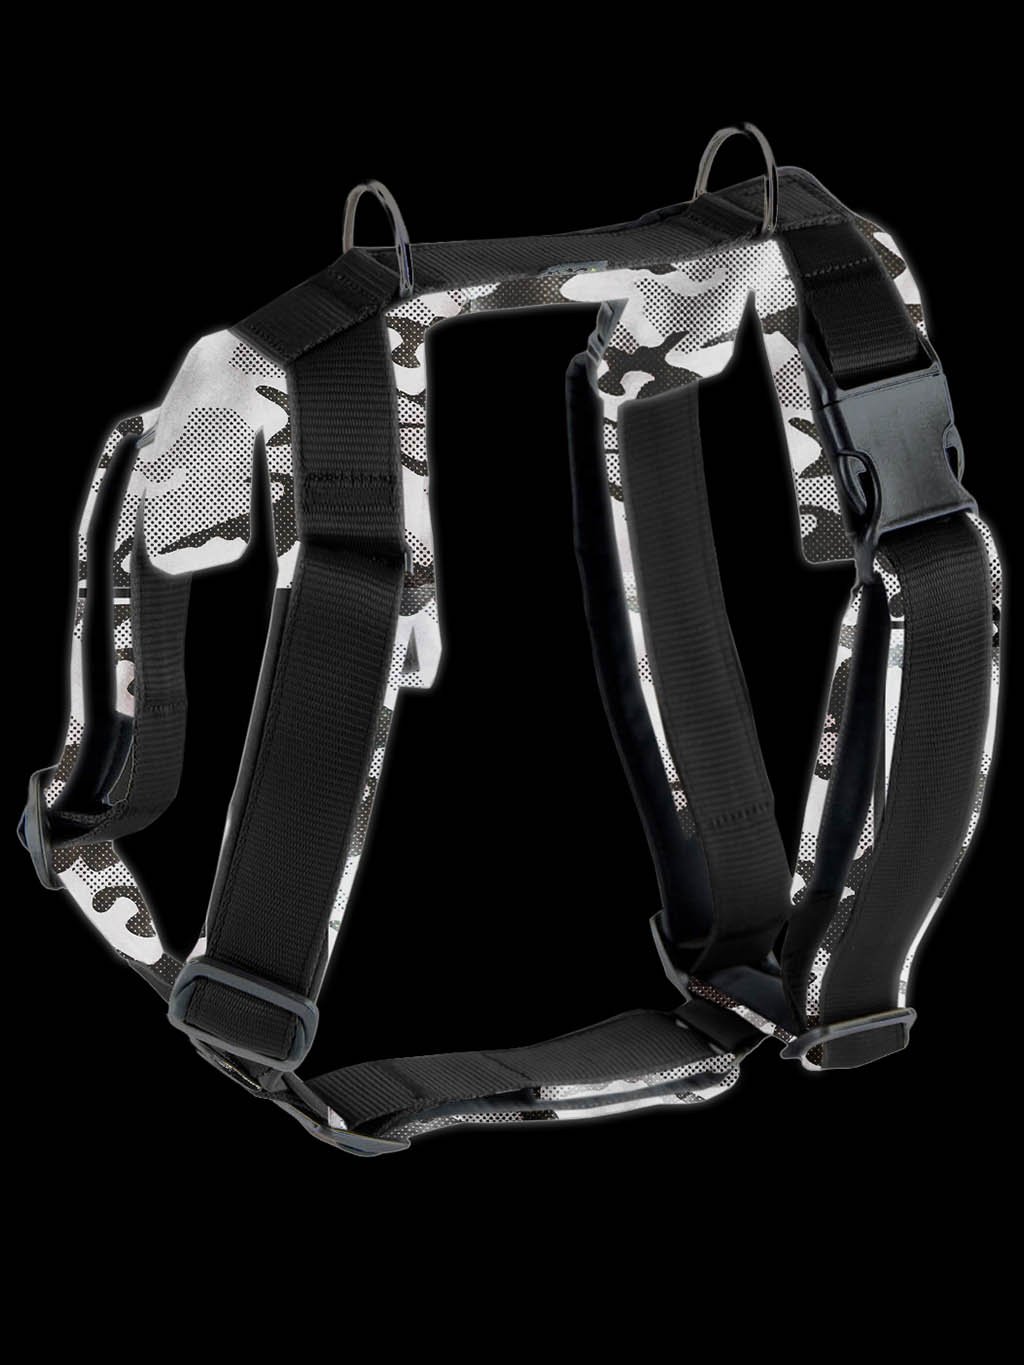 Comfort plus harness - black reflective camouflage